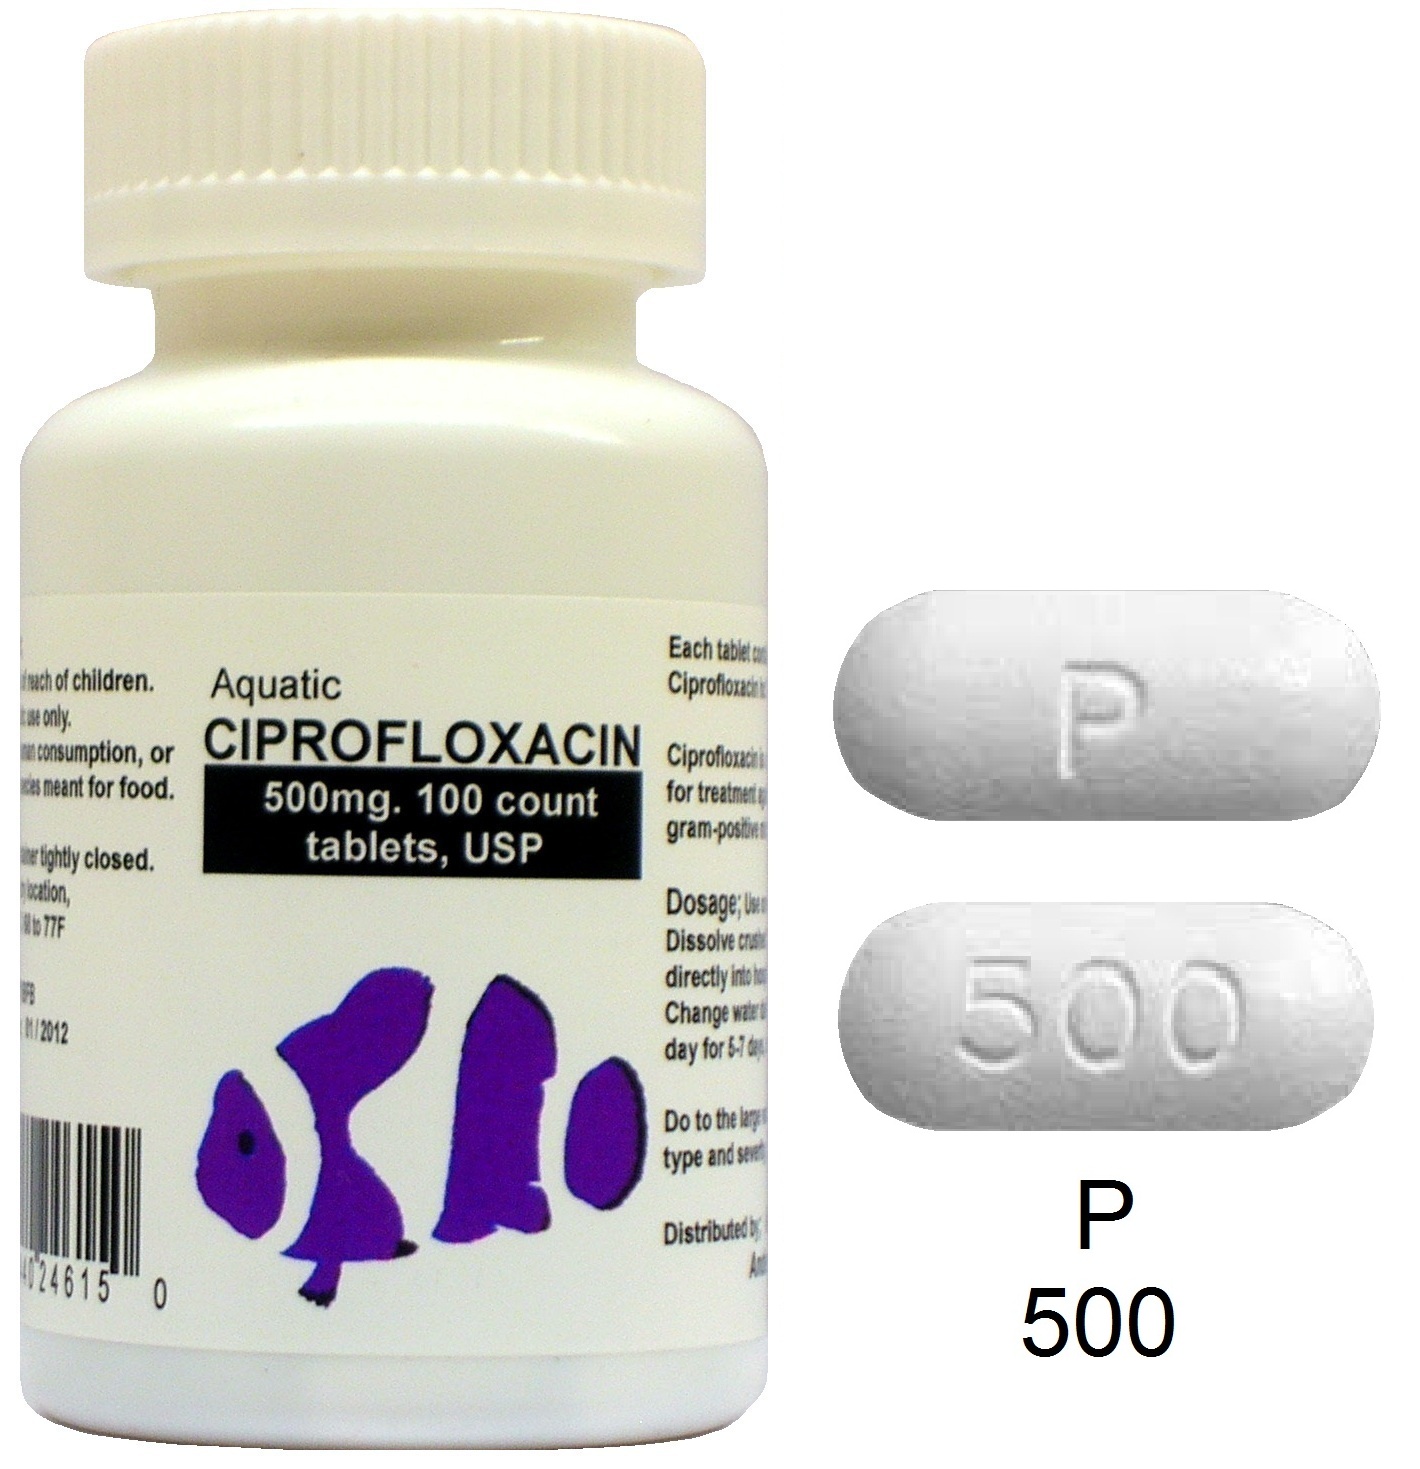 does ciprofloxacin hcl 500mg treat stds